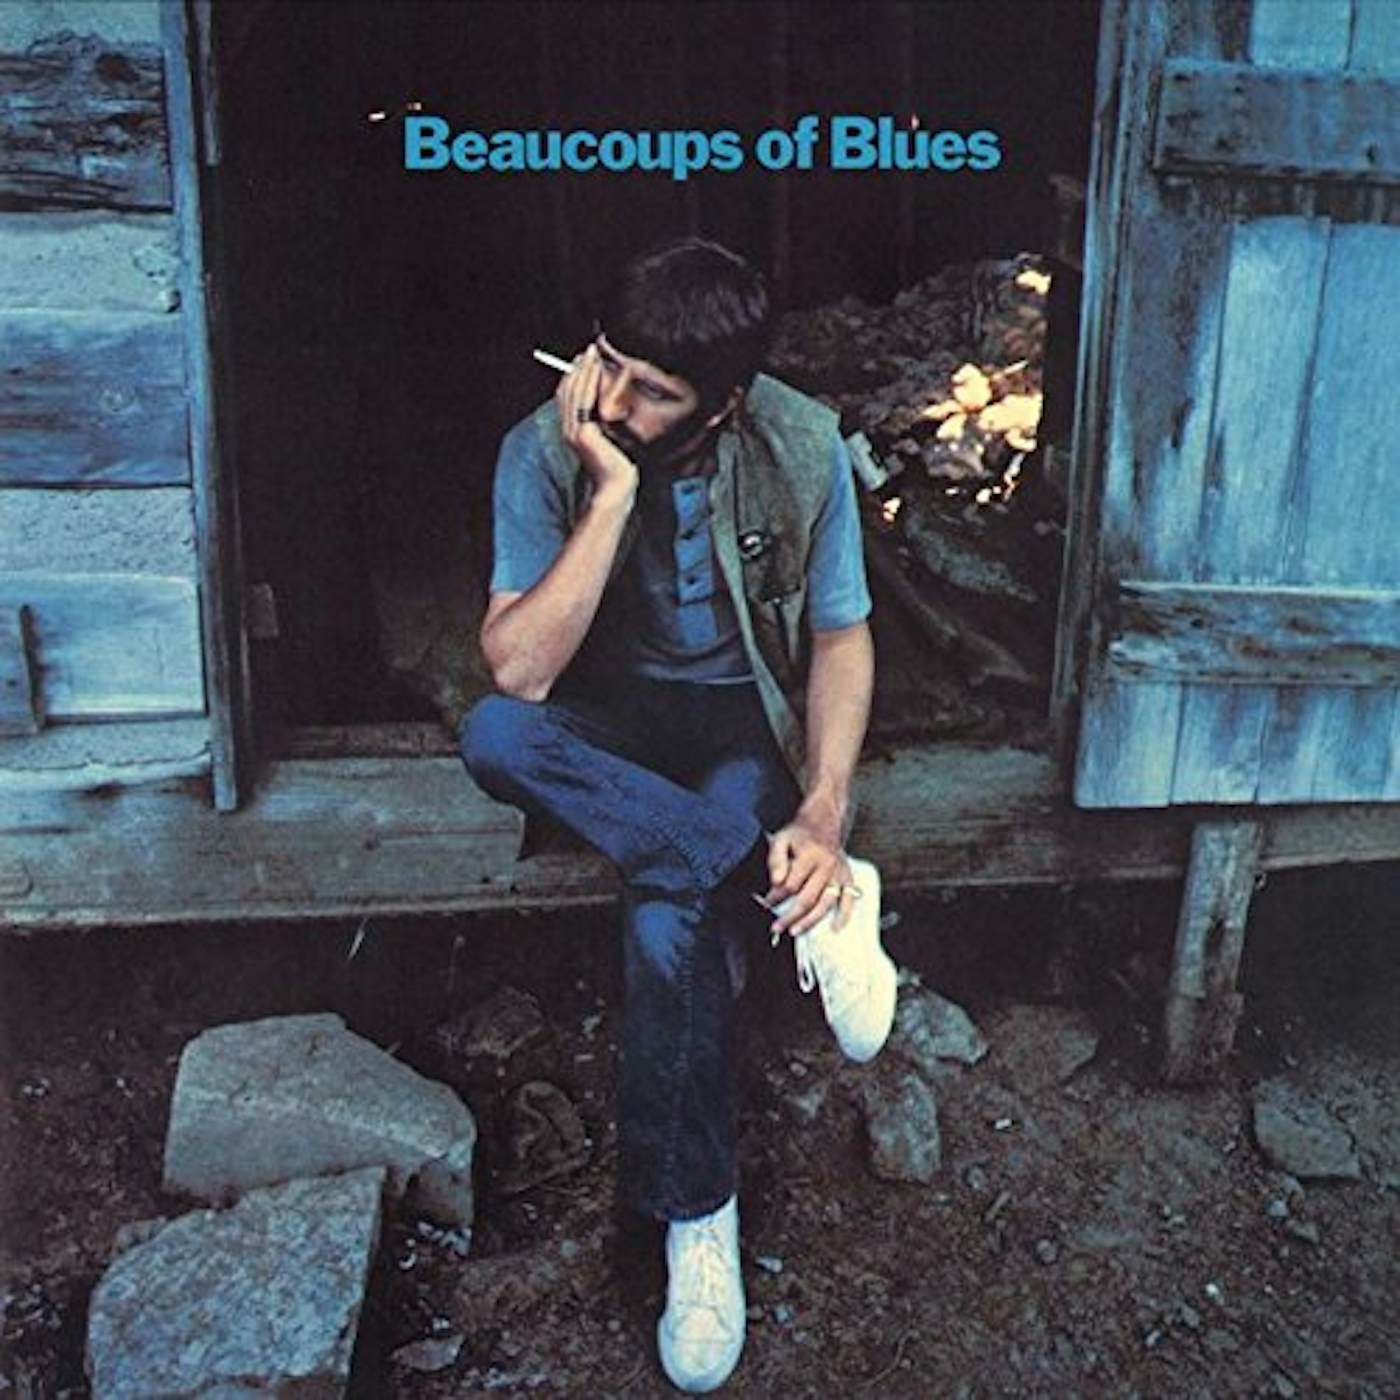 Ringo Starr BEAUCOUPS OF BLUES (LTD/MQA-CD/UHQCD) CD